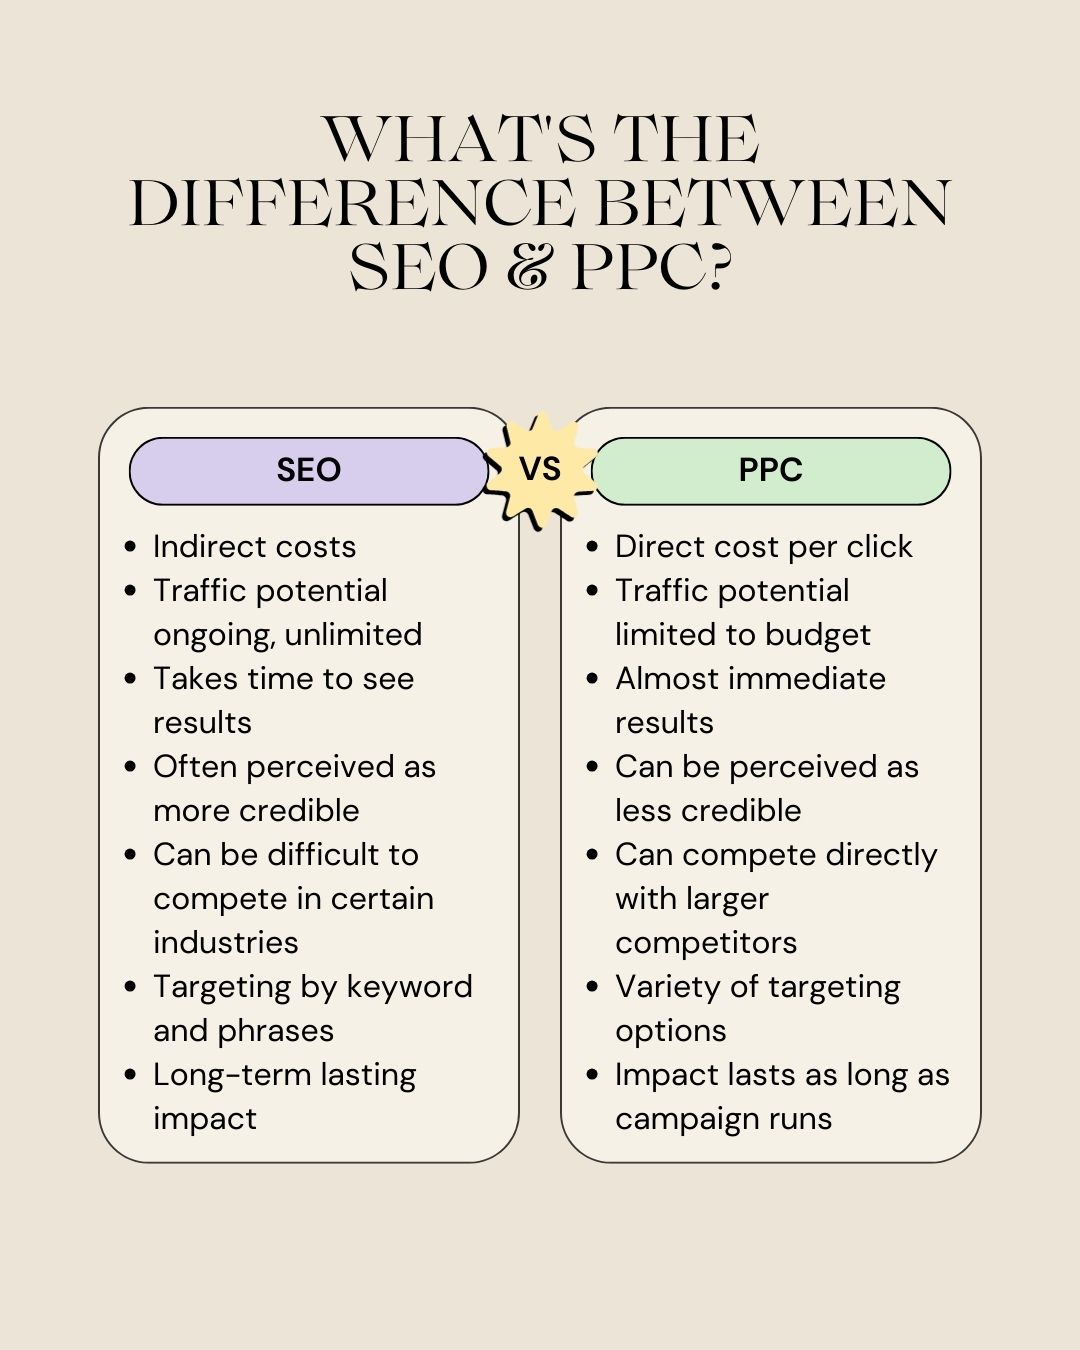 seo vs ppc infographic 6526b5be7fe3a sej - SEO Vs. PPC: Pros, Cons & Differences